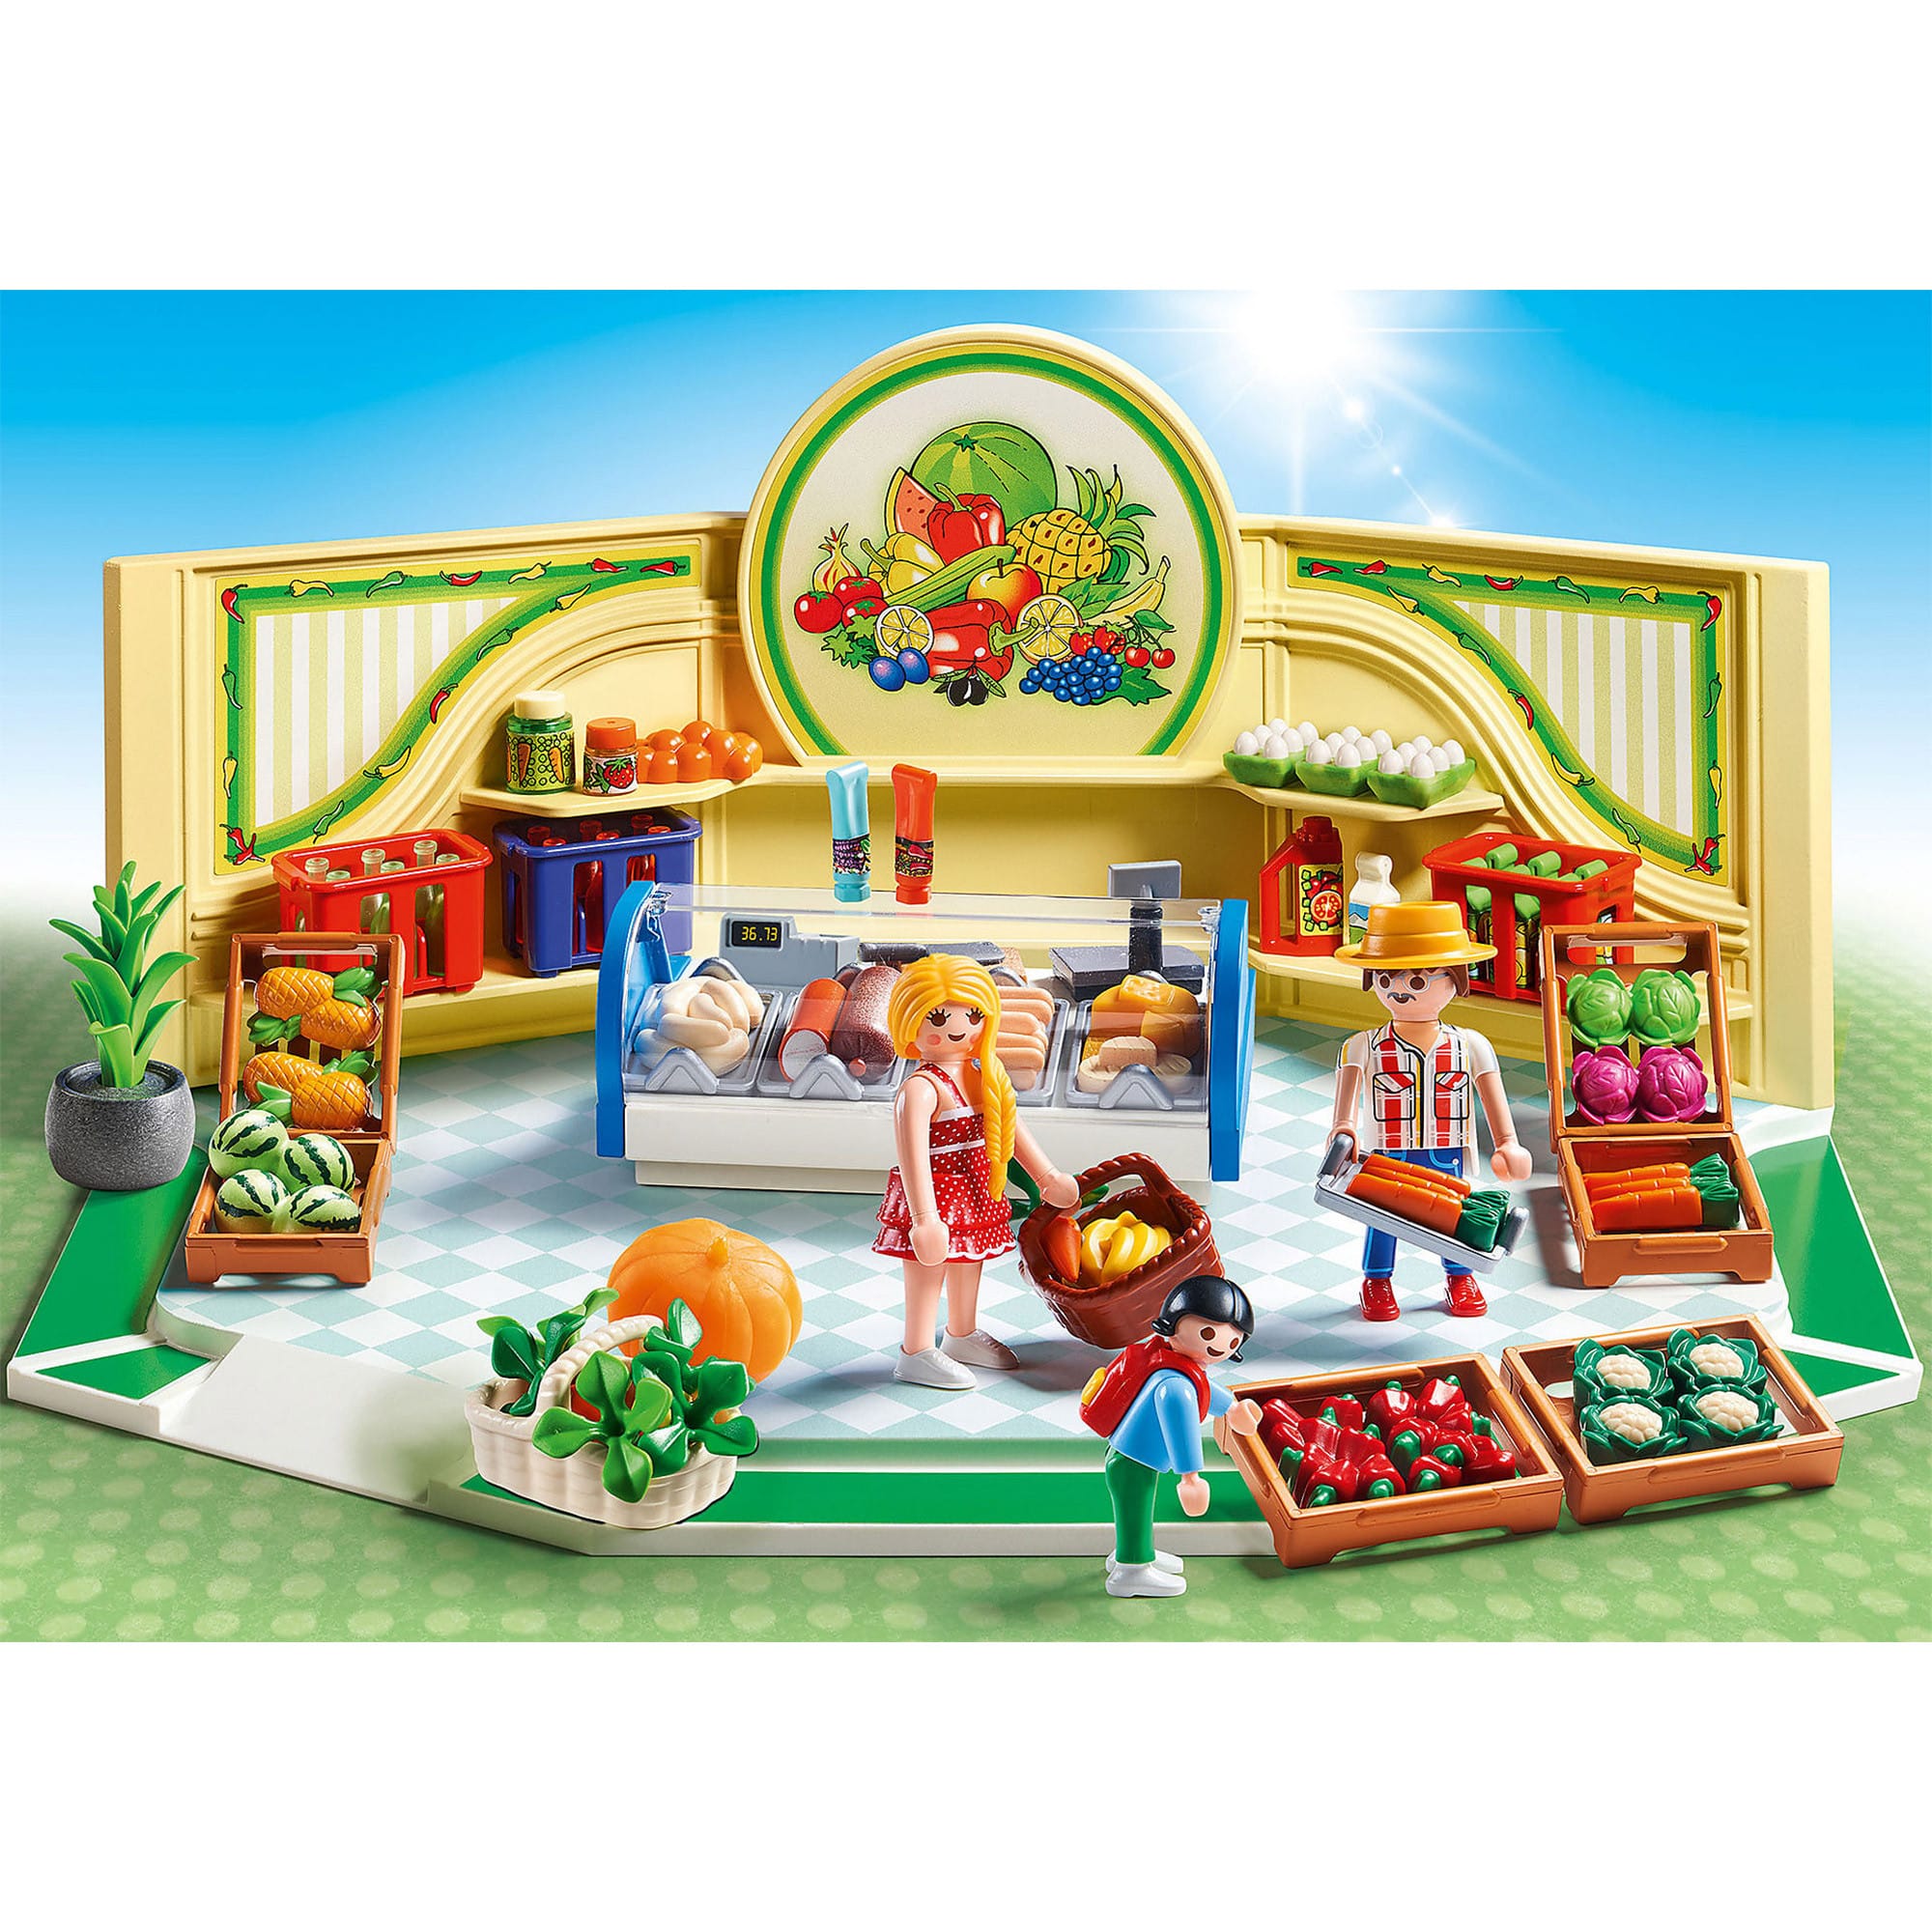 Playmobil - City Life - Grocery Shop 9403